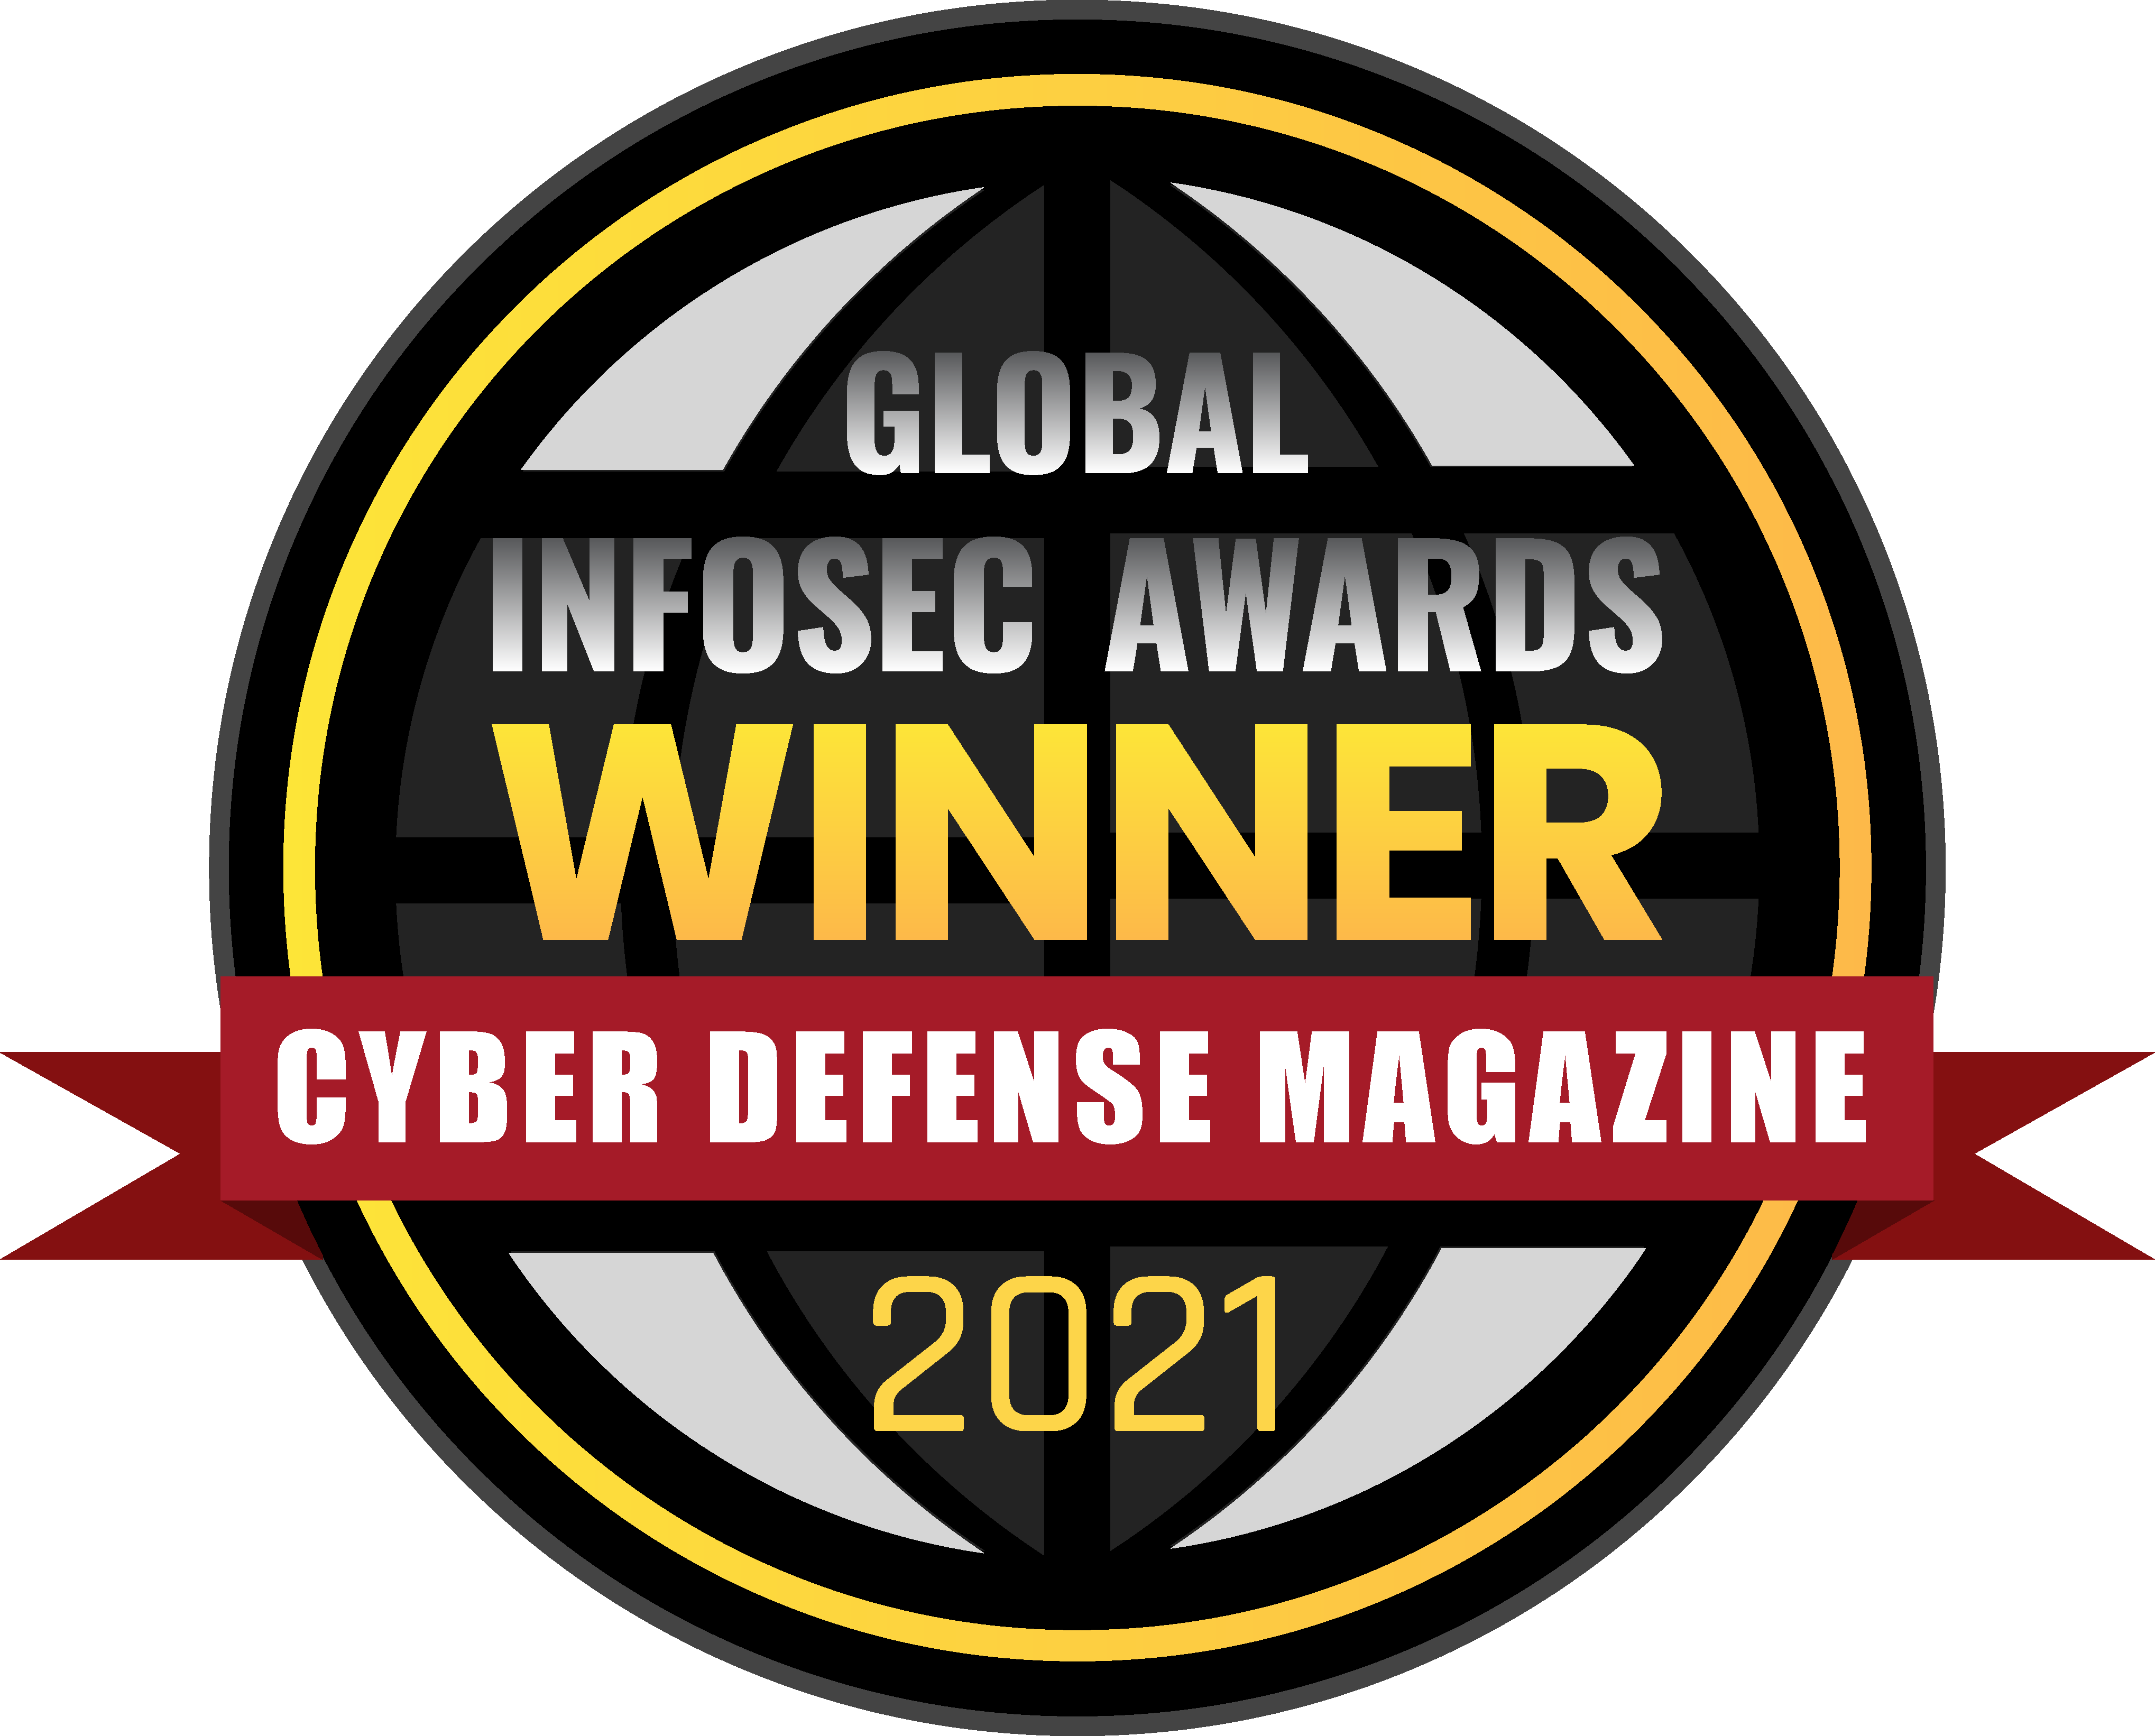 https://www.groundlabs.com/wp-content/uploads/2021/05/Global-InfoSec-Awards-for-2021-Winner.png